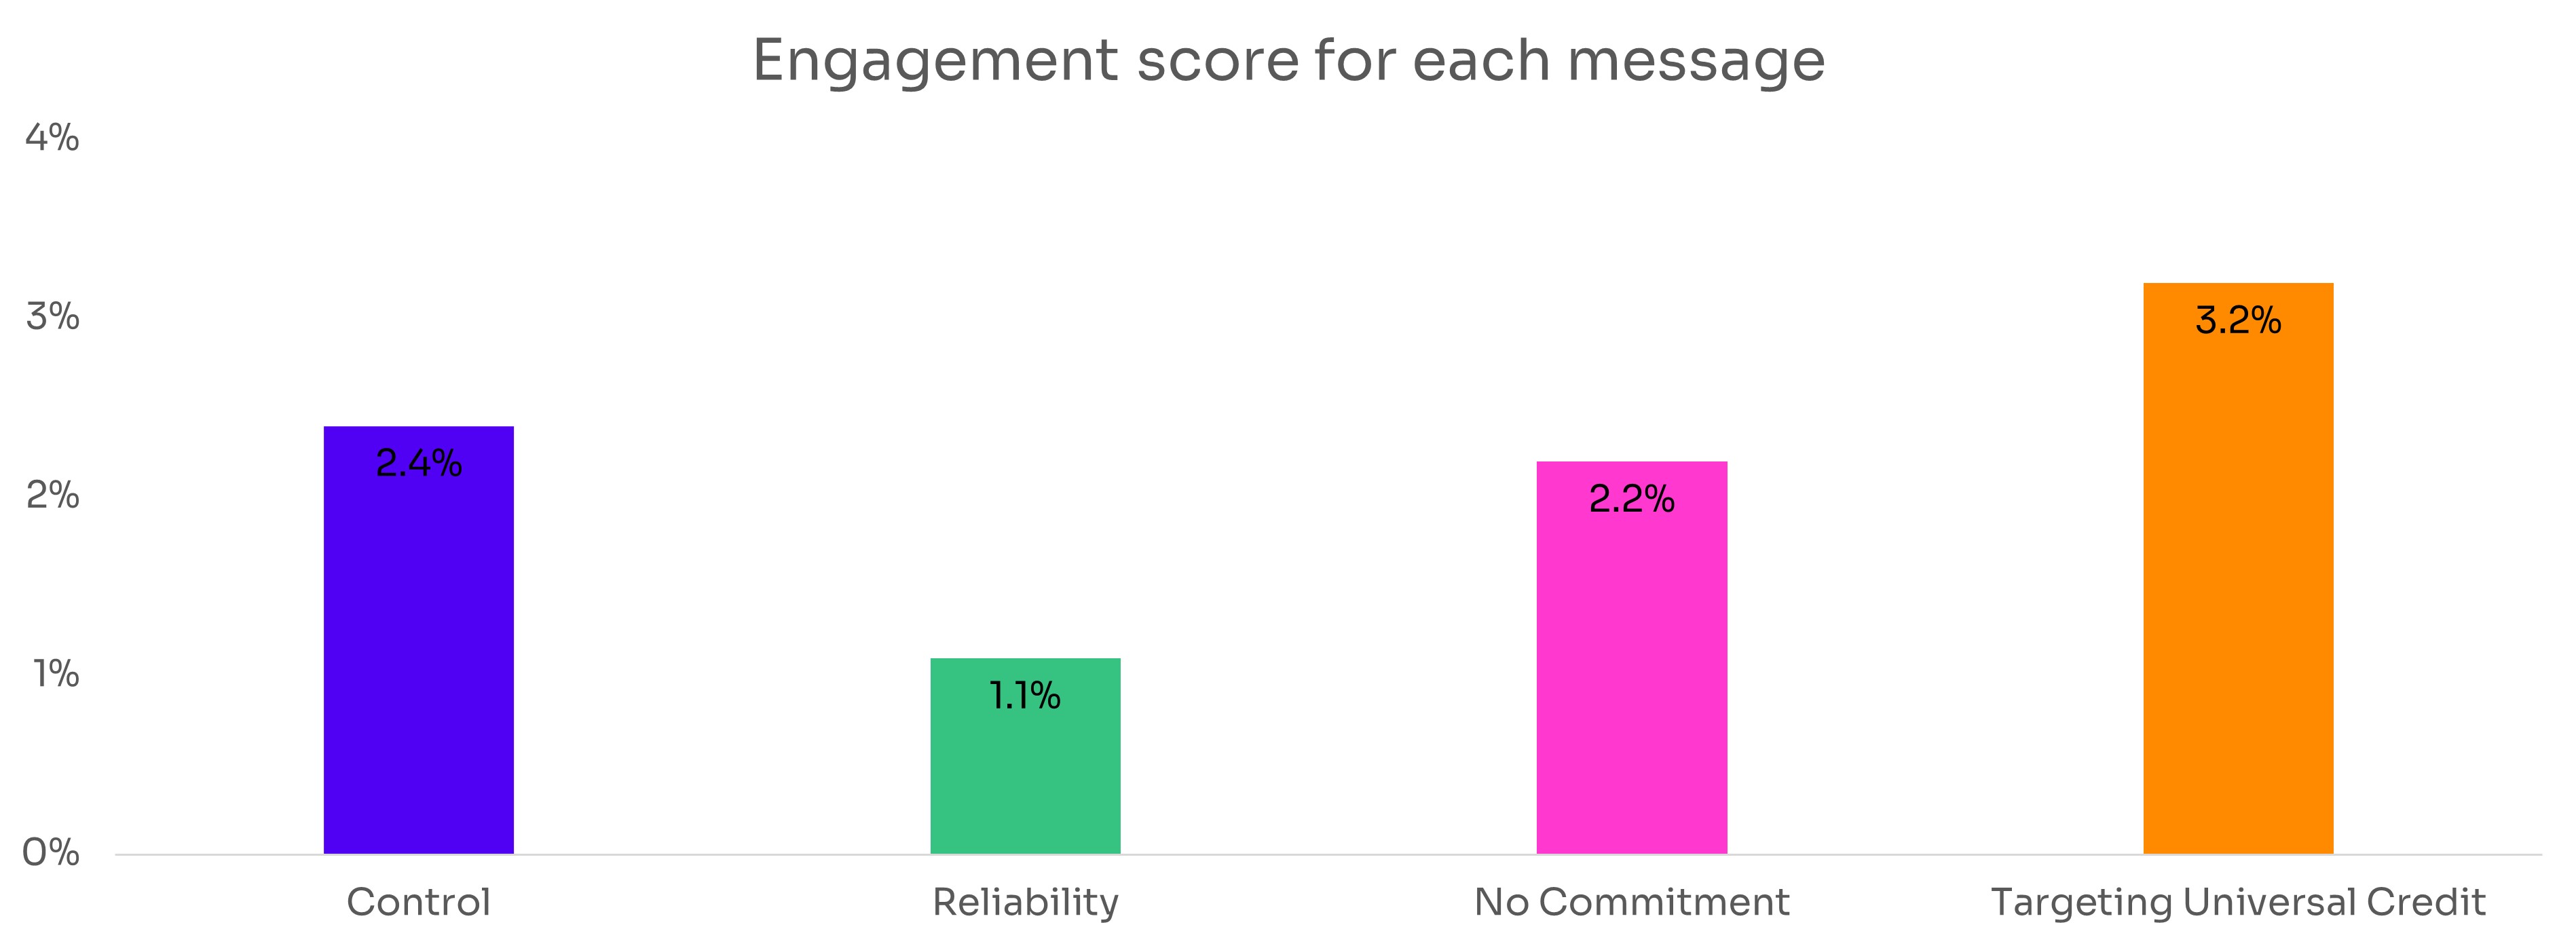 Engagement score